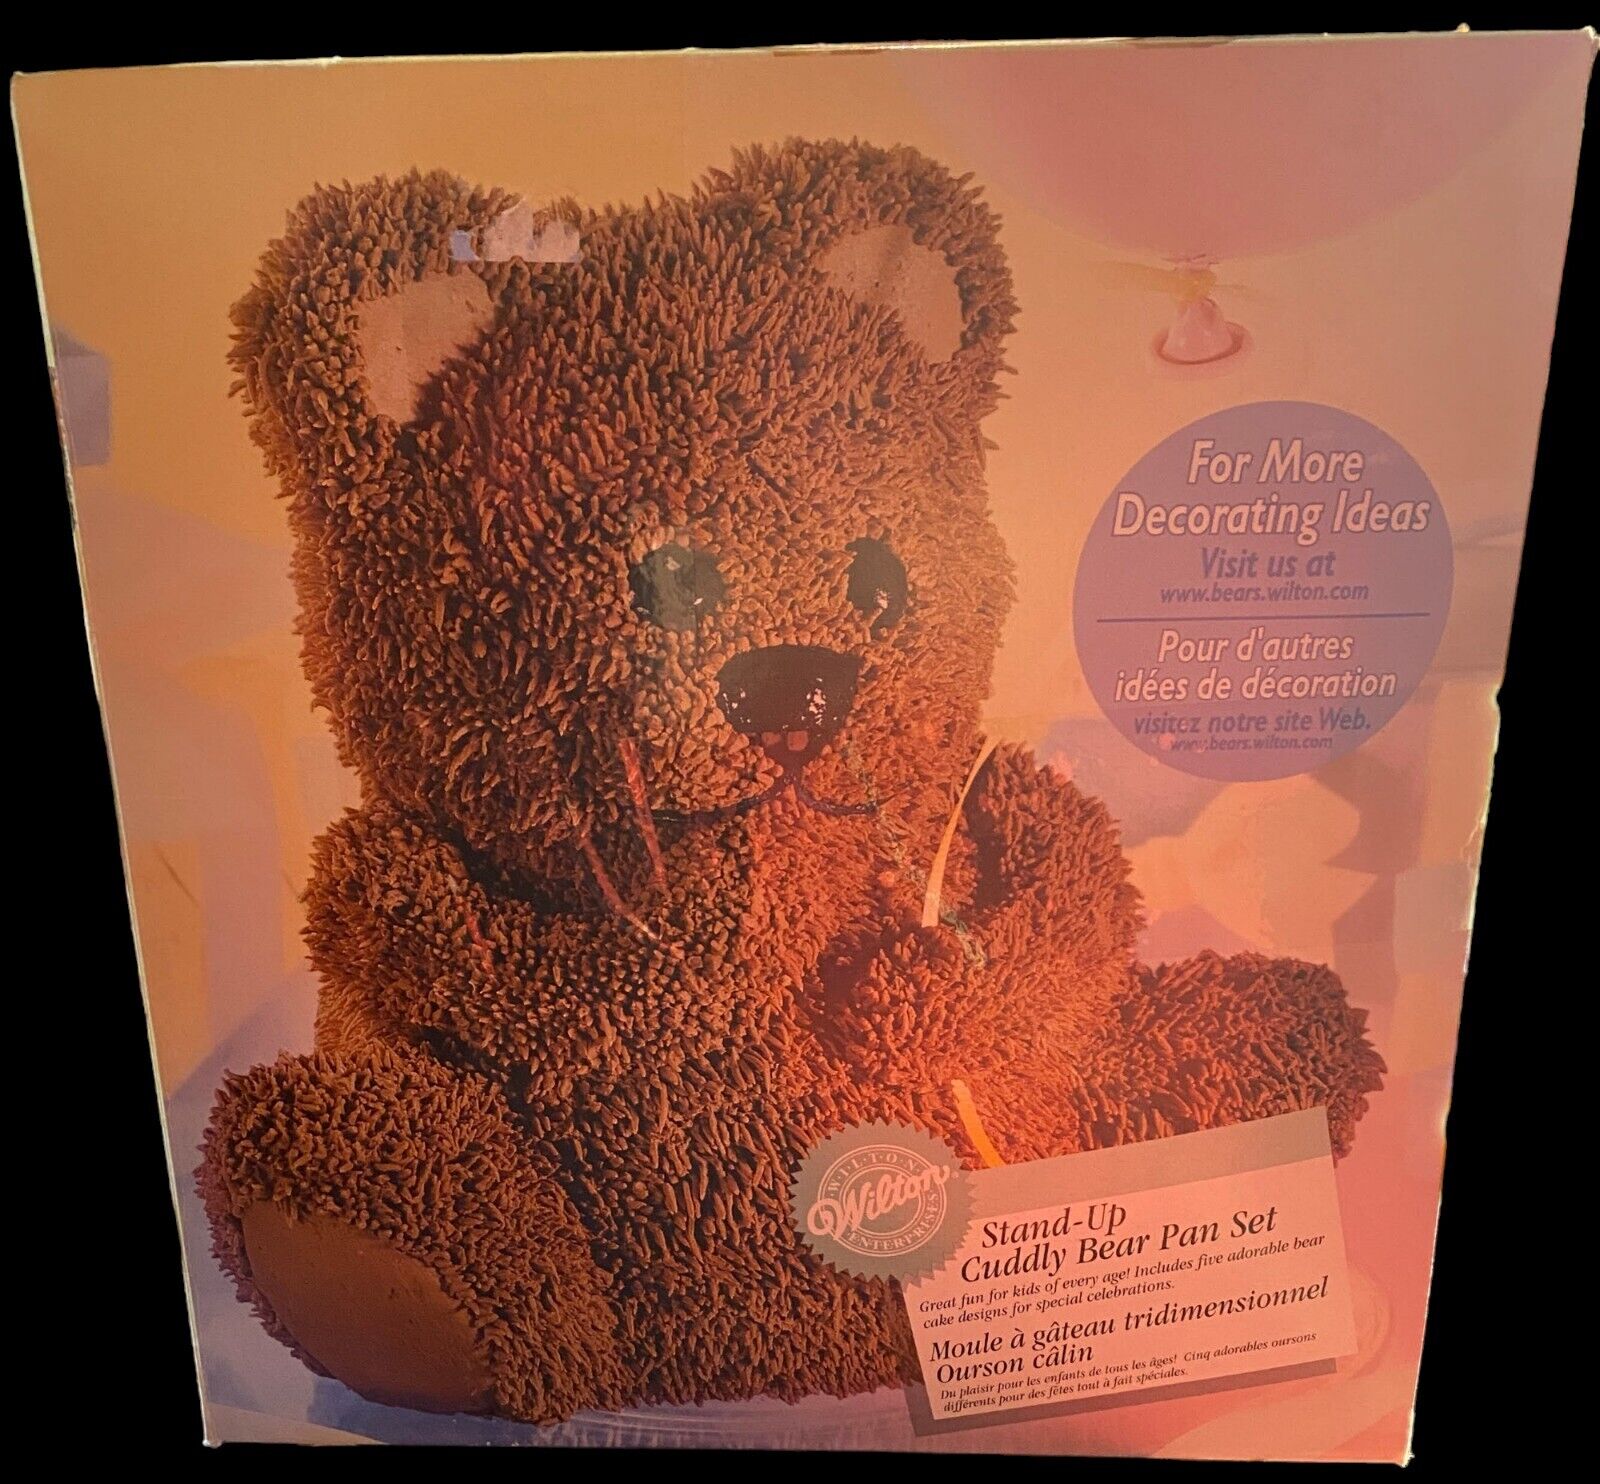 Vintage Wilton Stand-Up Cuddly Bear Cake Pan Set 2105-603 New in box